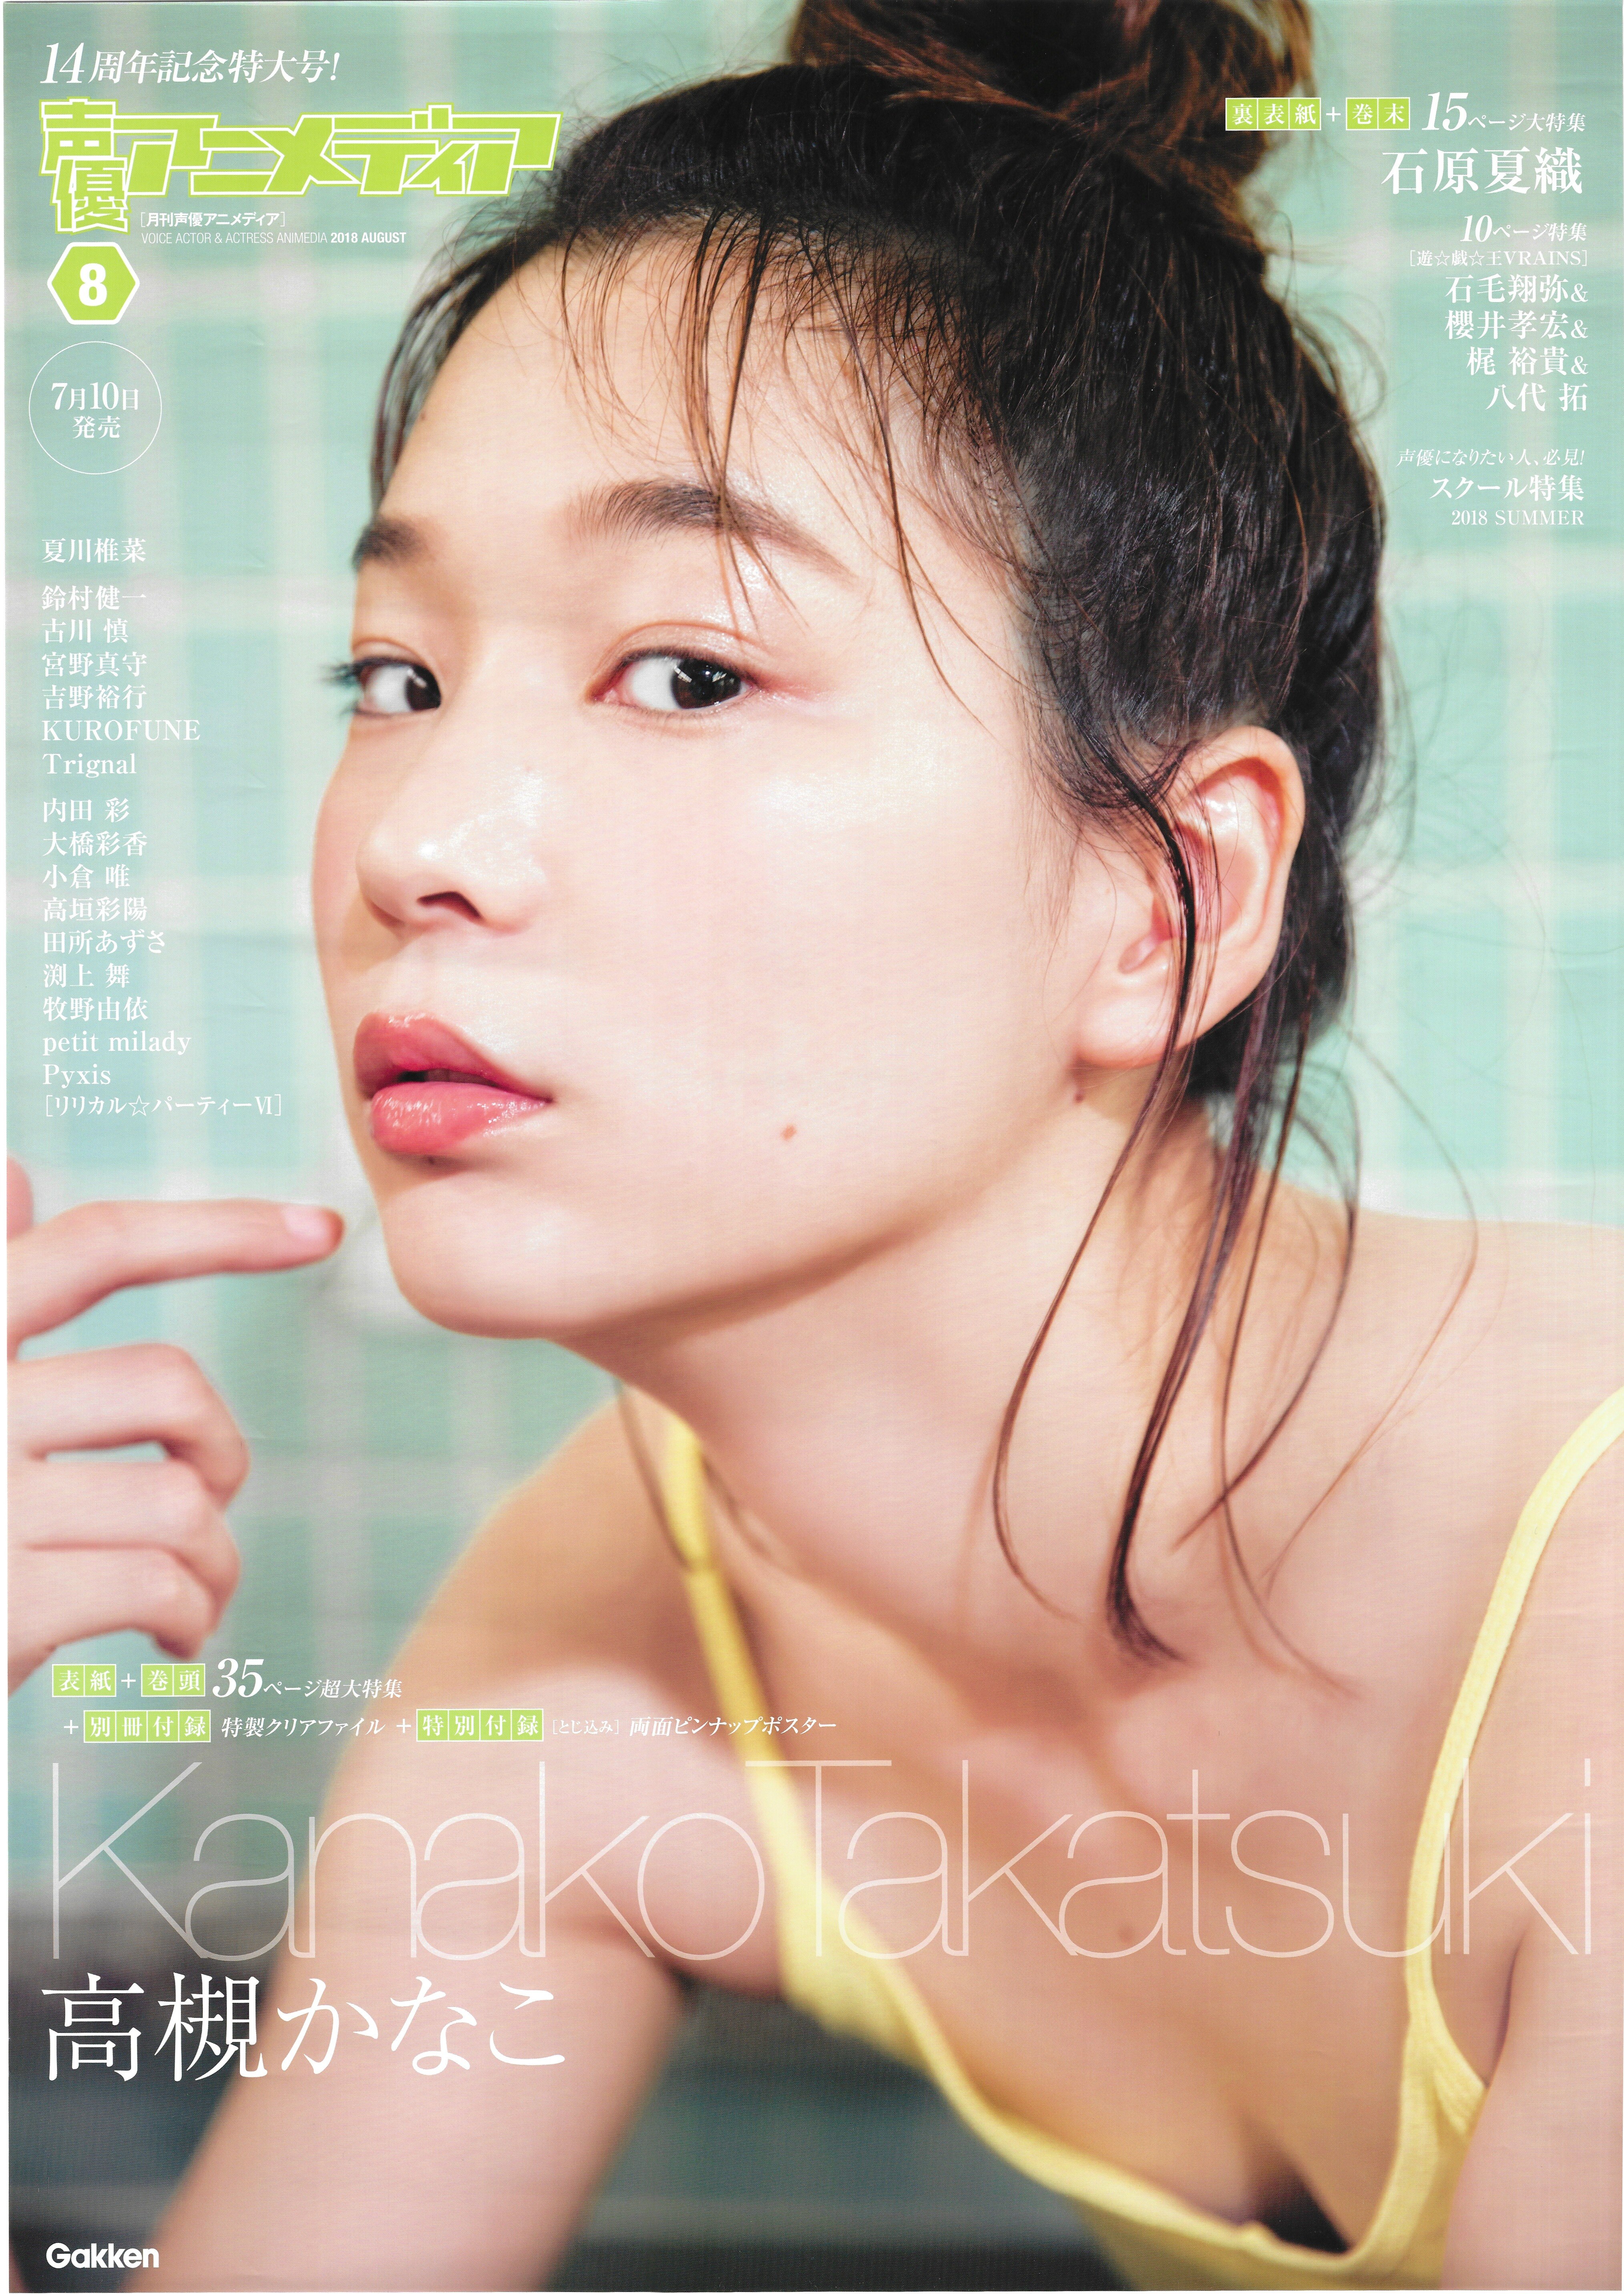 Bonus Item Kanako Takatsuki Monthly Seiyu Animedia August 18 Edition B2 Poster Mandarake Online Shop